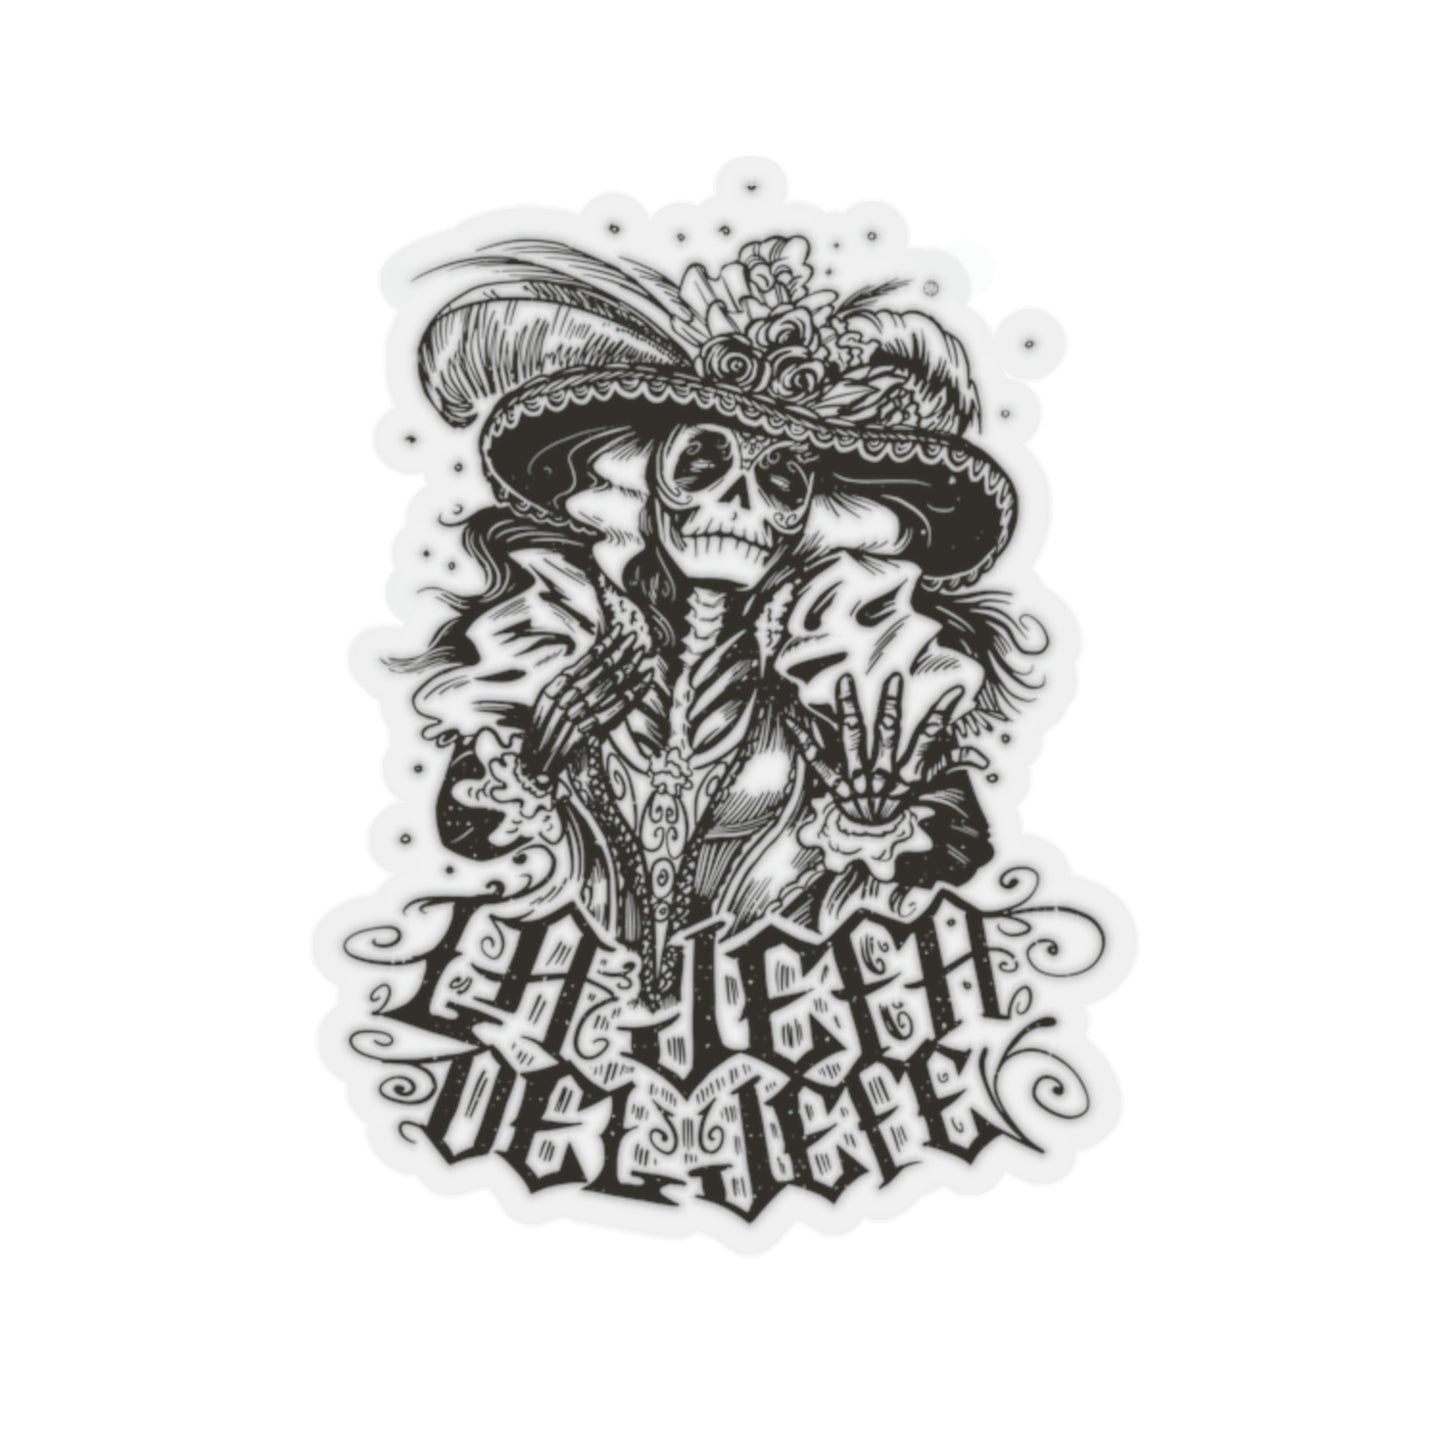 Mexican Skeleton LA JEFA DEL JEFE Sticker